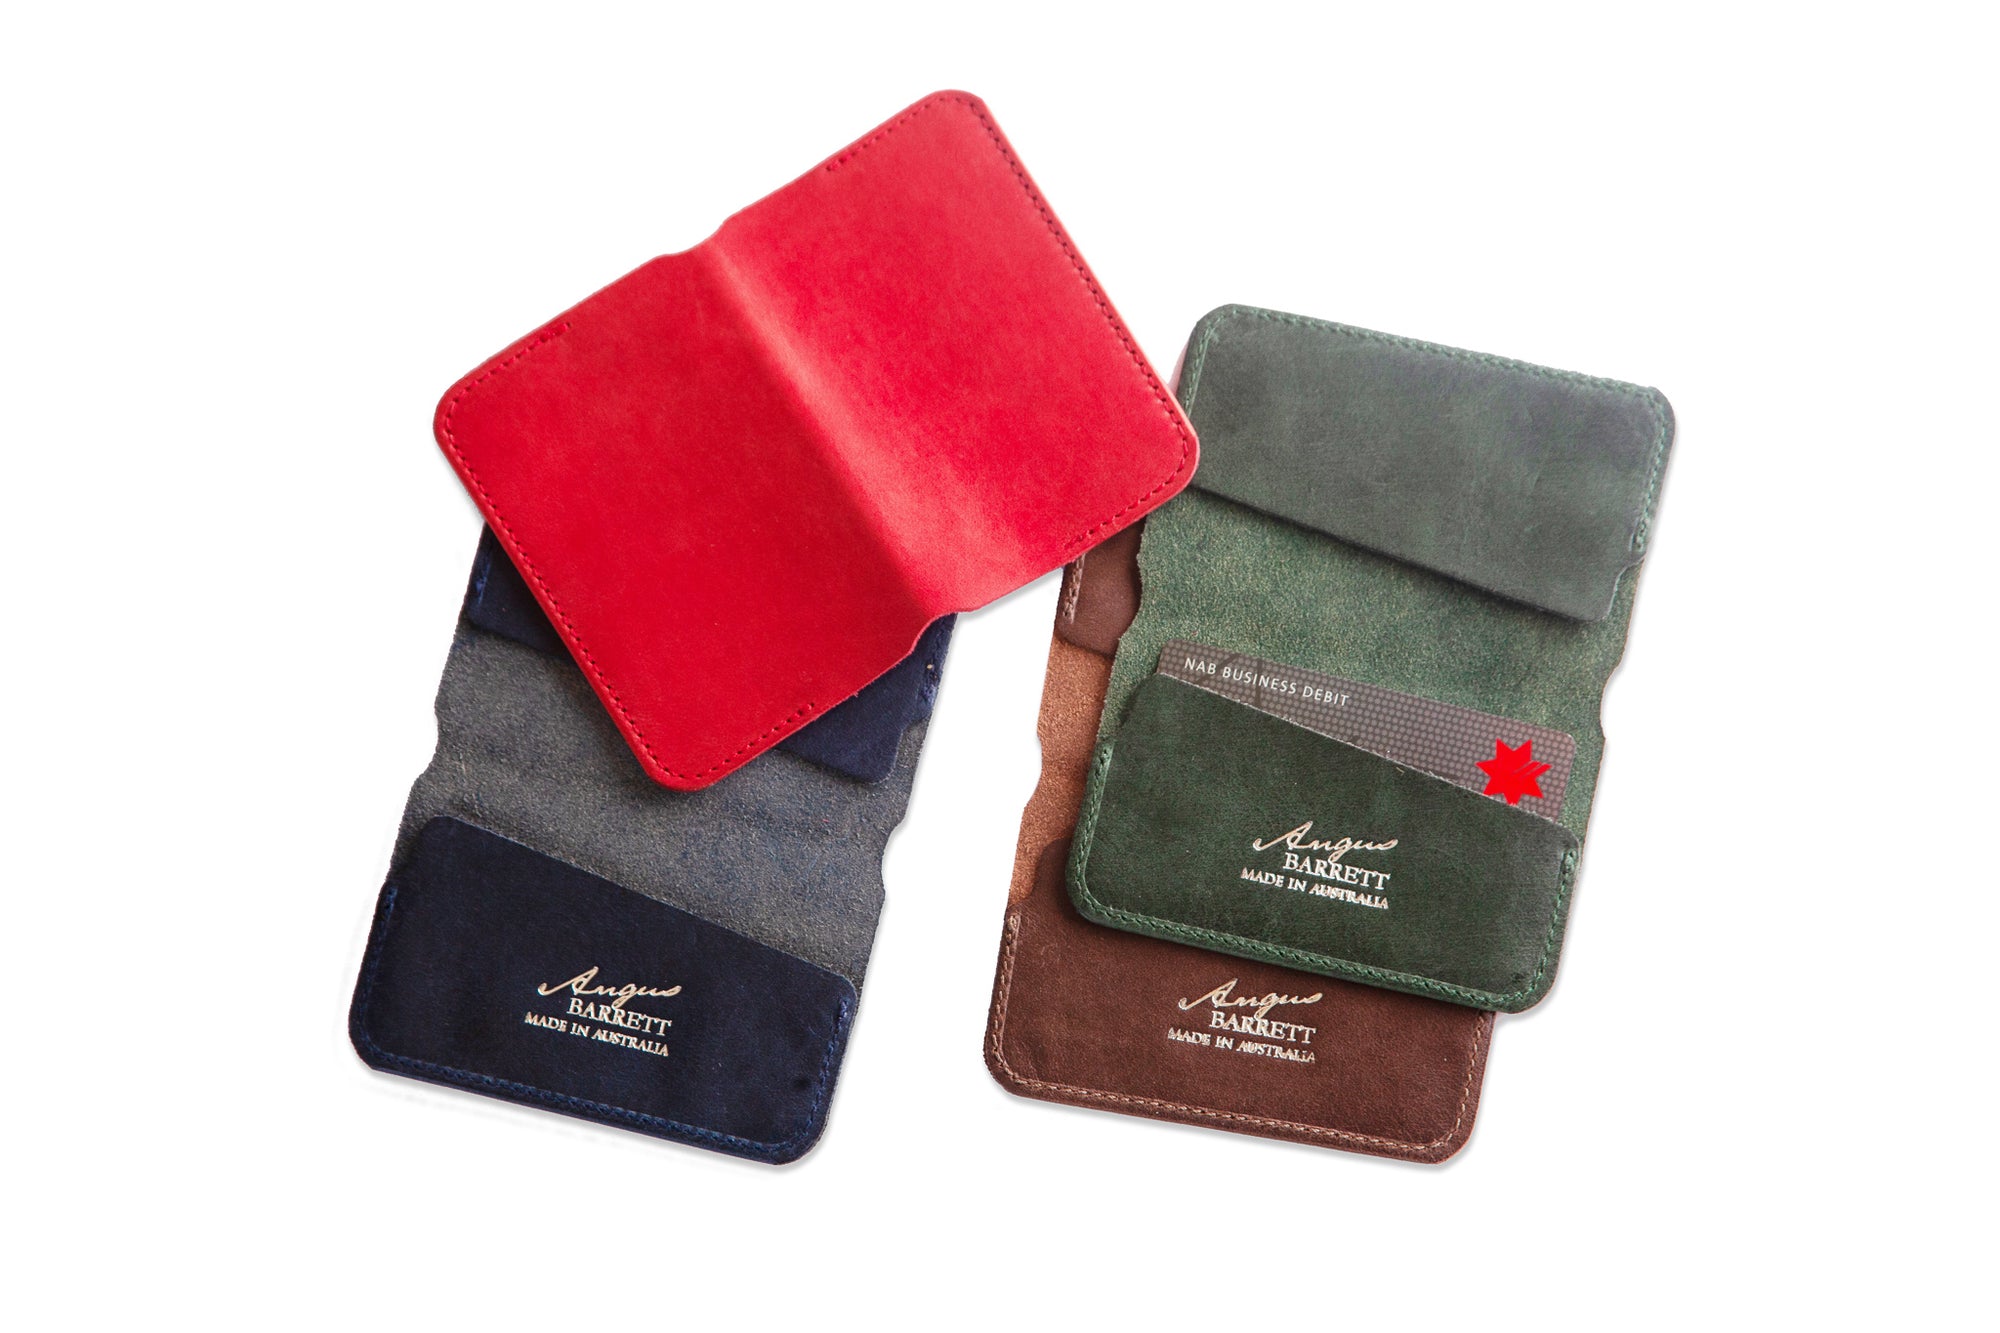 The "Little Yarra" Italian Leather Wallet | Angus Barrett Saddlery